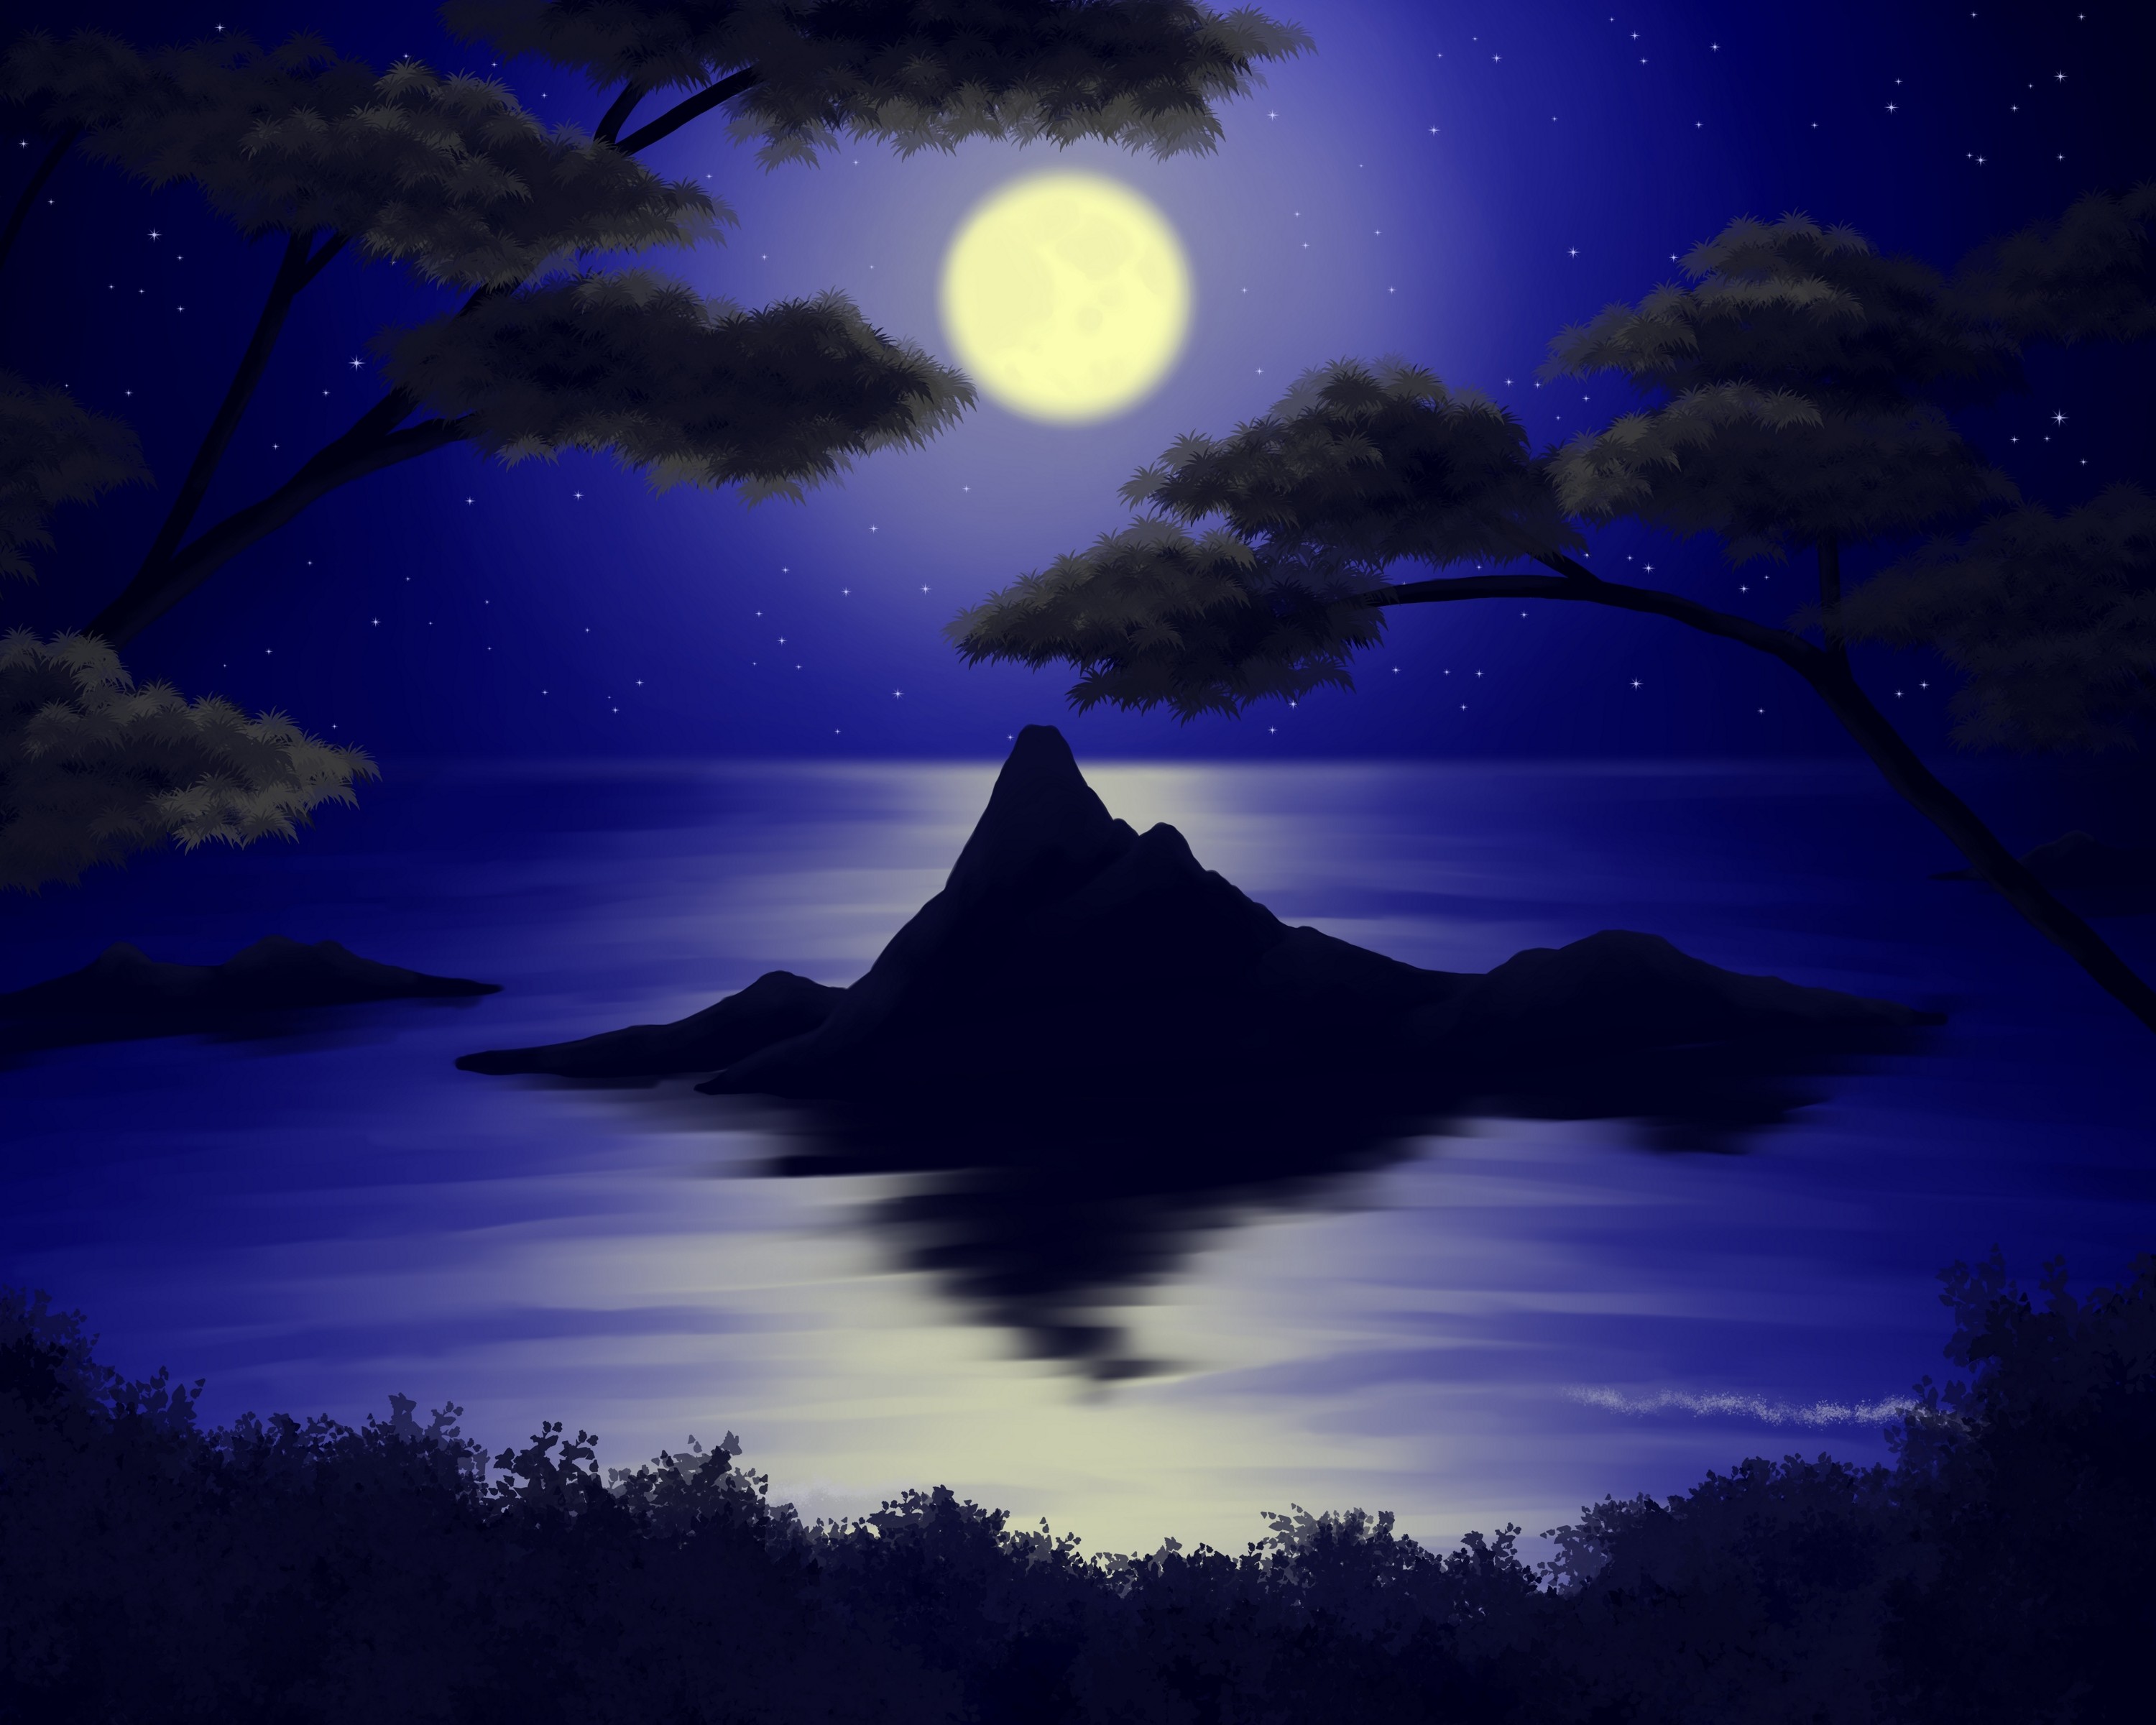 Island in the moonlight by Nipuni Perera